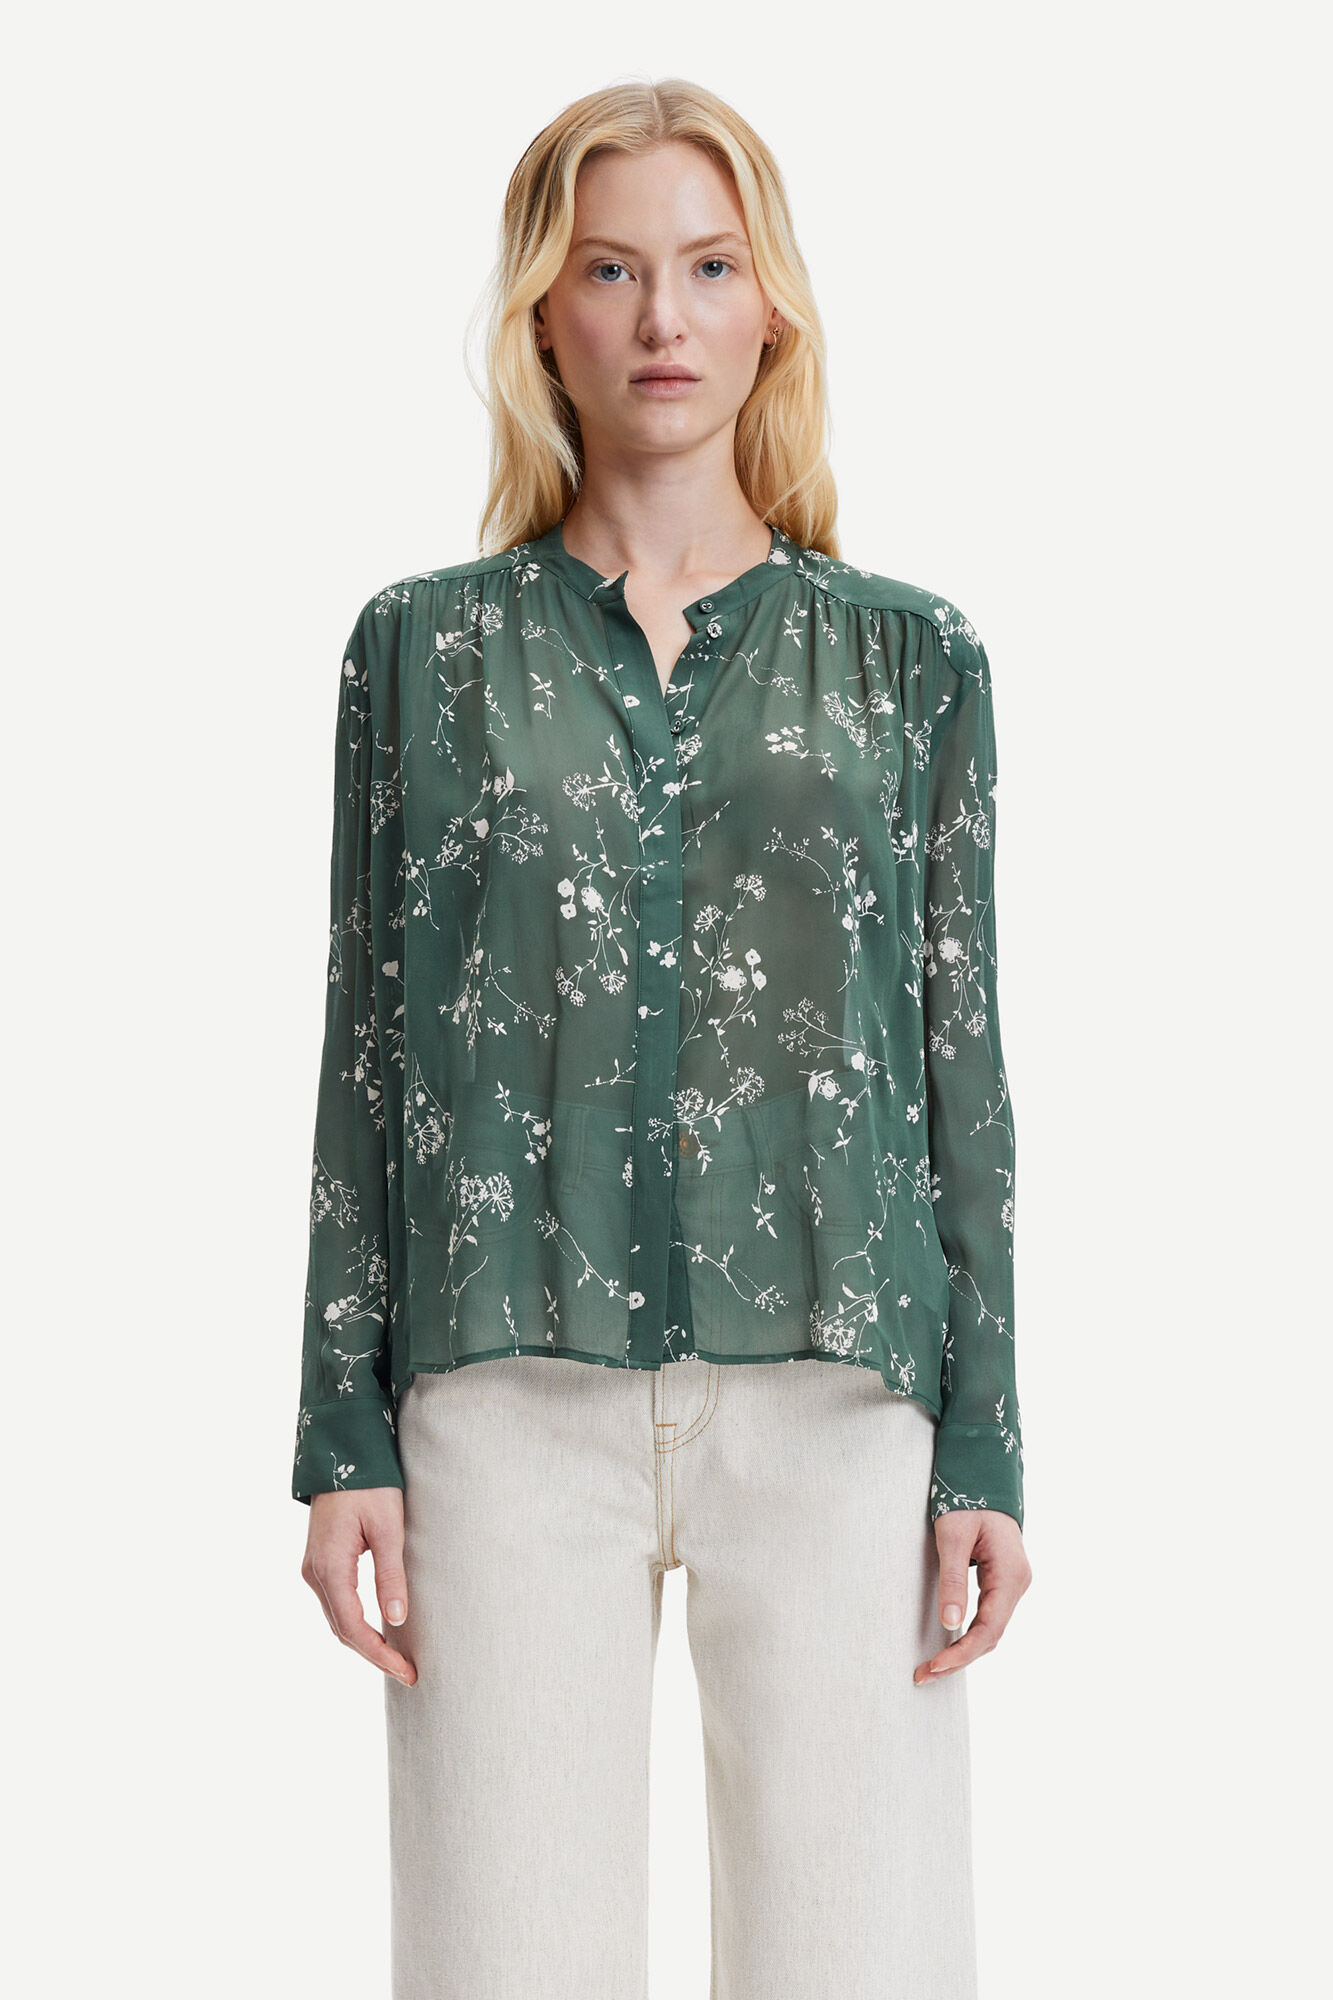 Mode Blouses Mouwloze blouses Samsøe & samsøe Sams\u00f8e & sams\u00f8e Mouwloze blouse room gestippeld patroon elegant 